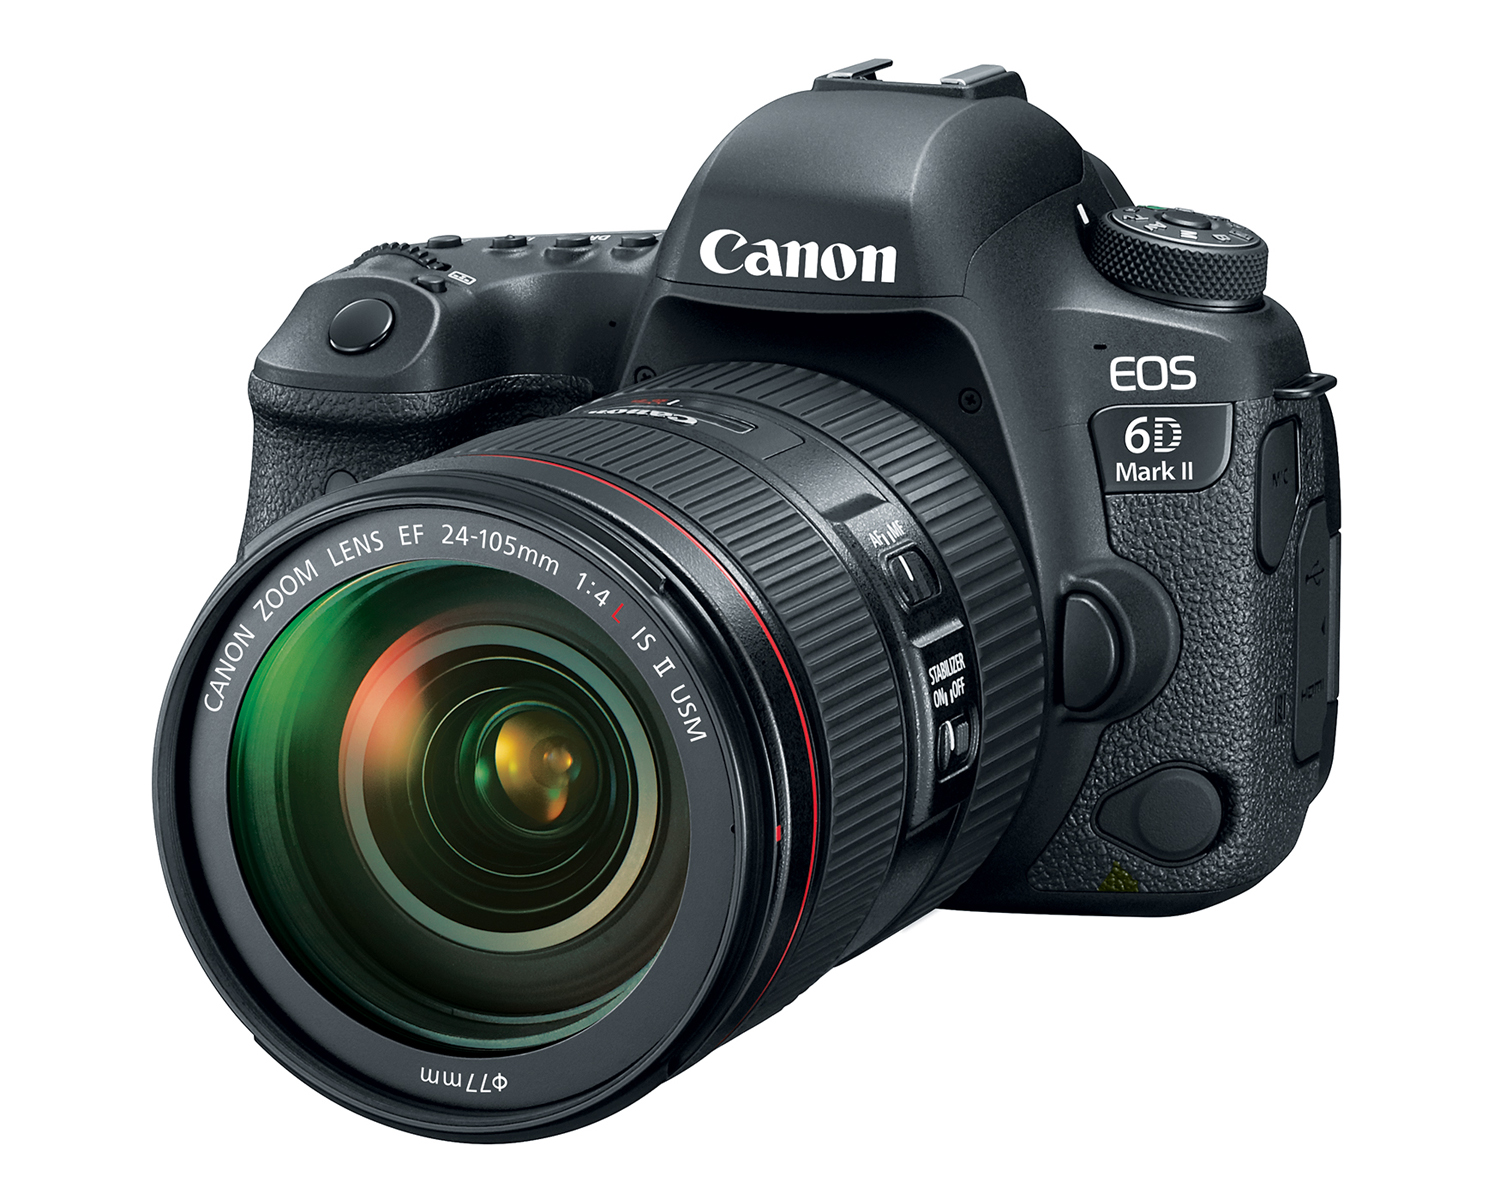 Canon EOS Mark II high performance appears worse original EOS 6D